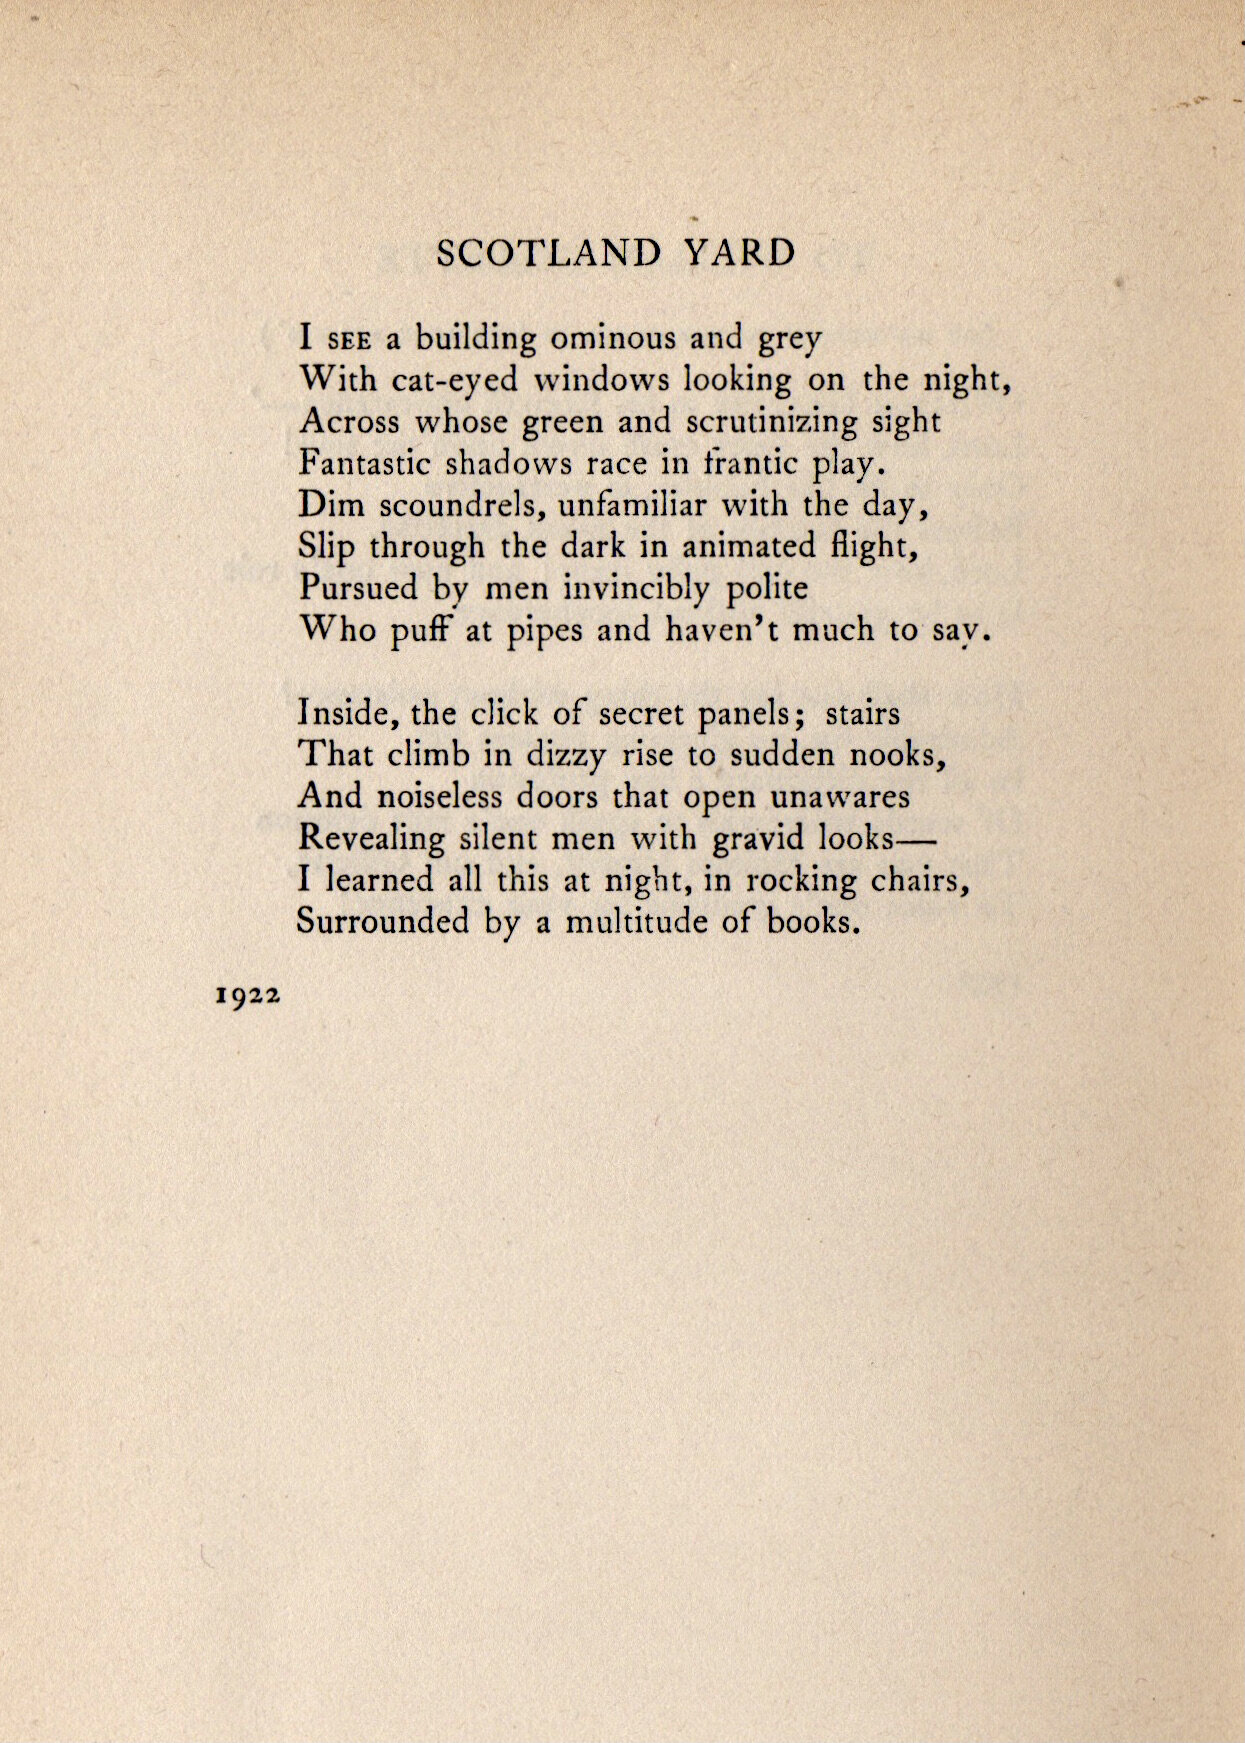 SHiana 3 Poem by VS cover SYard (1).jpeg